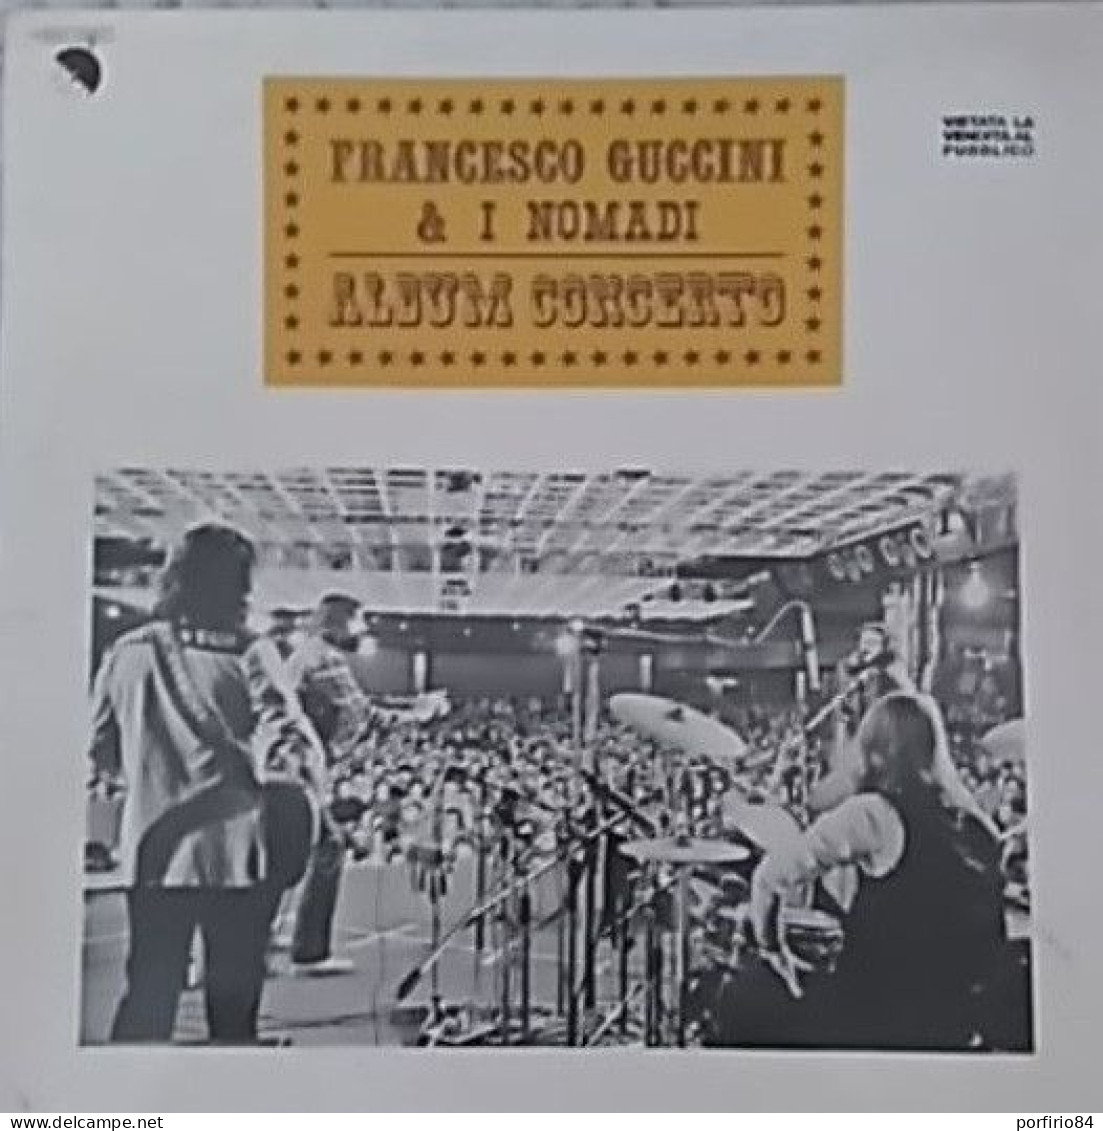 FRANCESCO GUCCINI & I NOMADI ALBUM CONCERTO LP 33 GIRI PROMO DEL 1979 - Otros - Canción Italiana